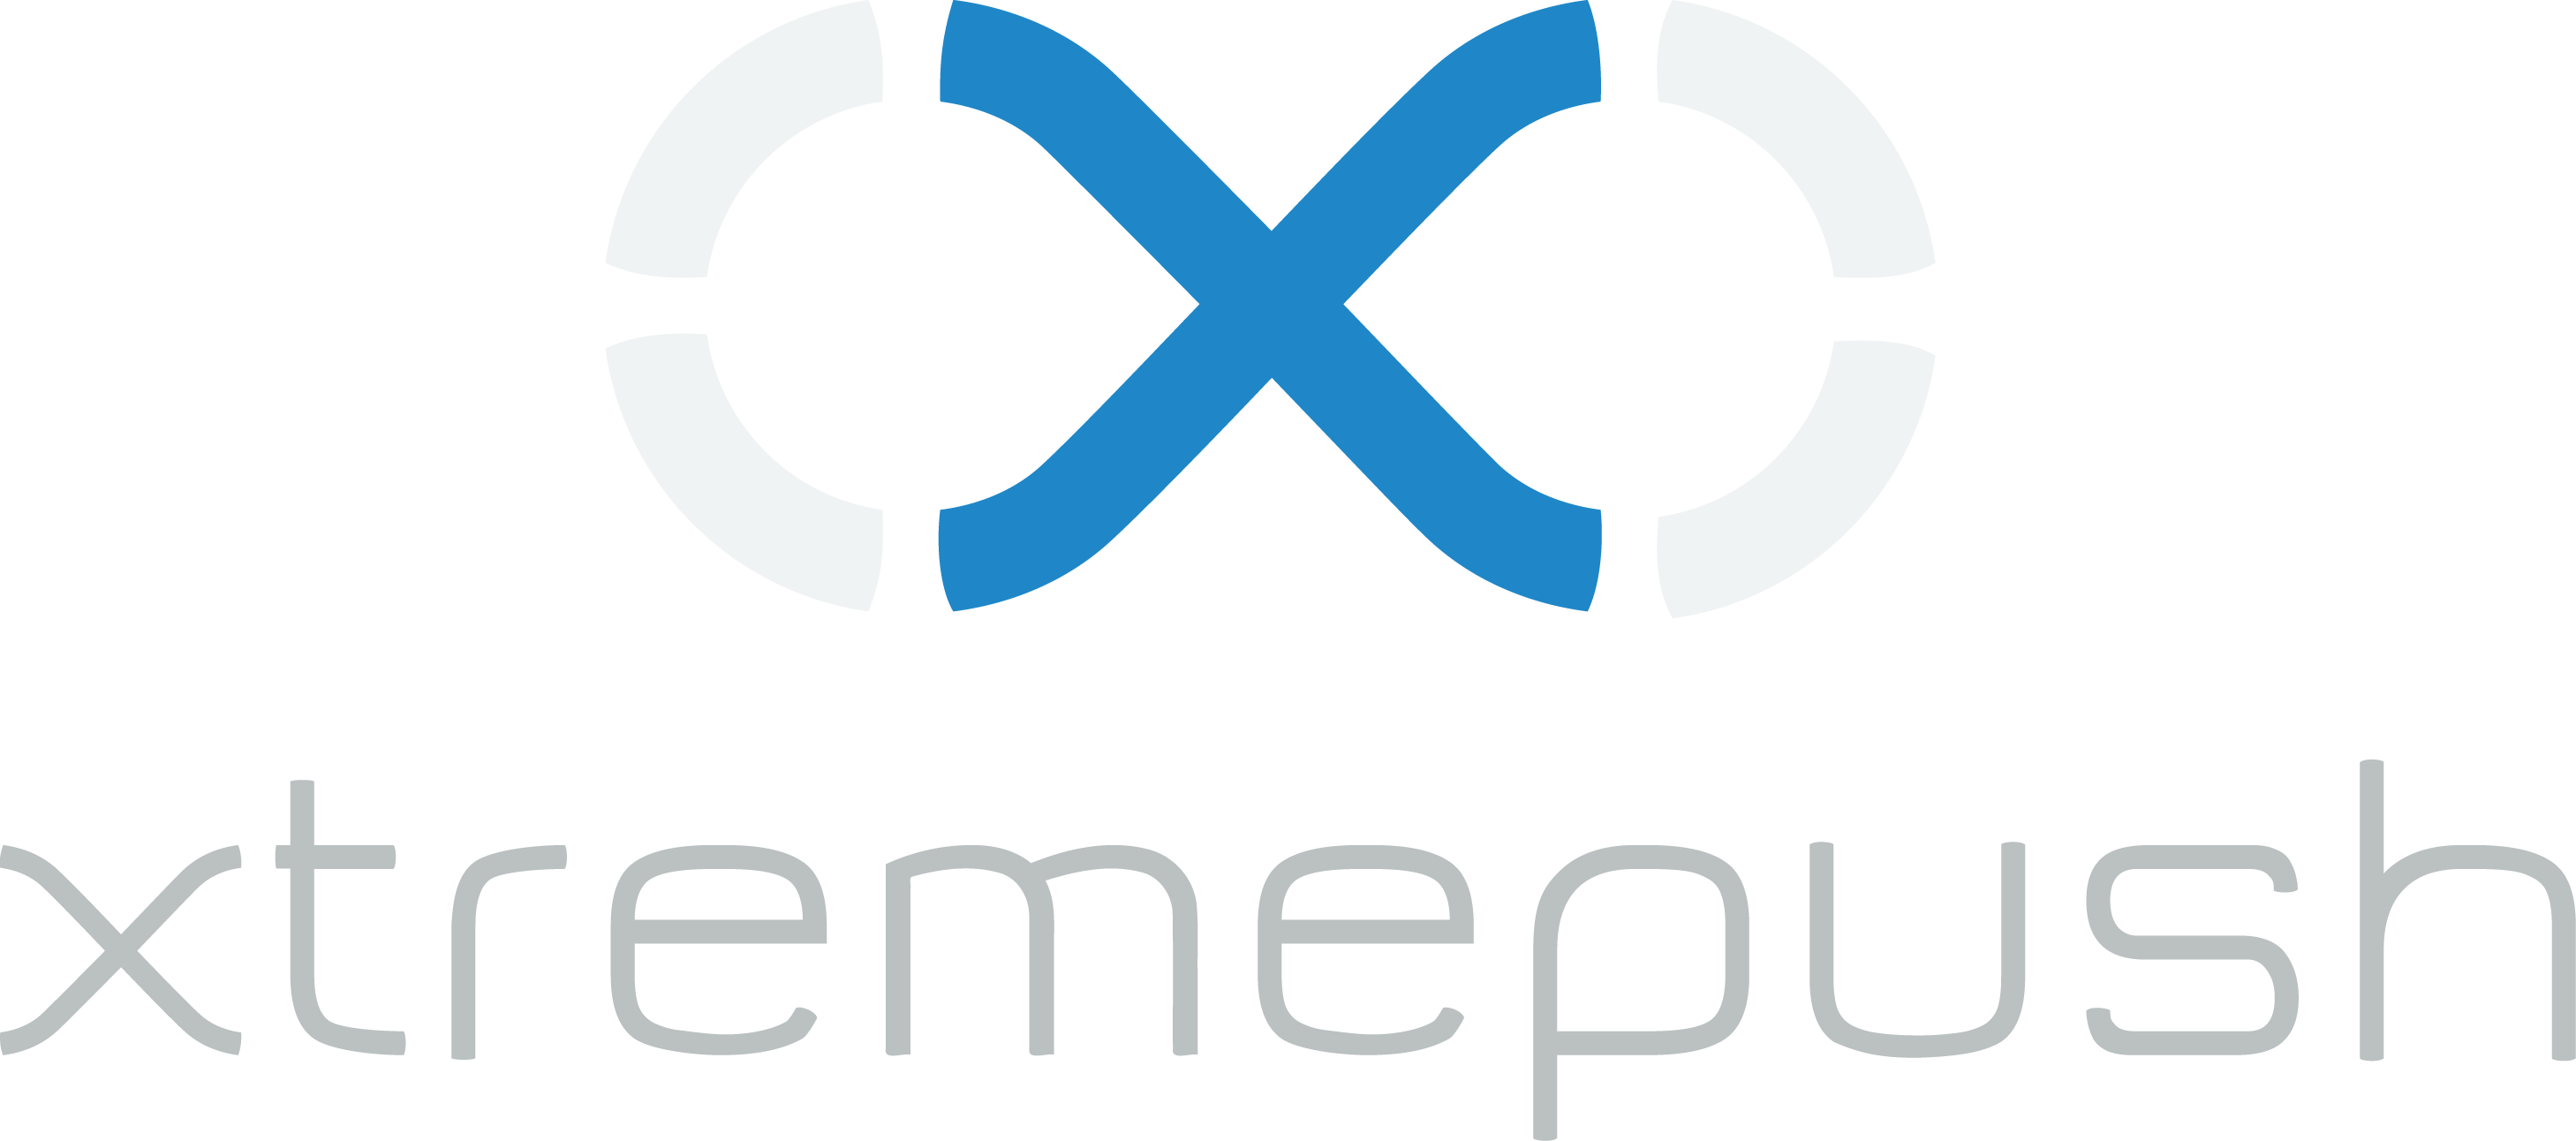 Xtremepush_logo